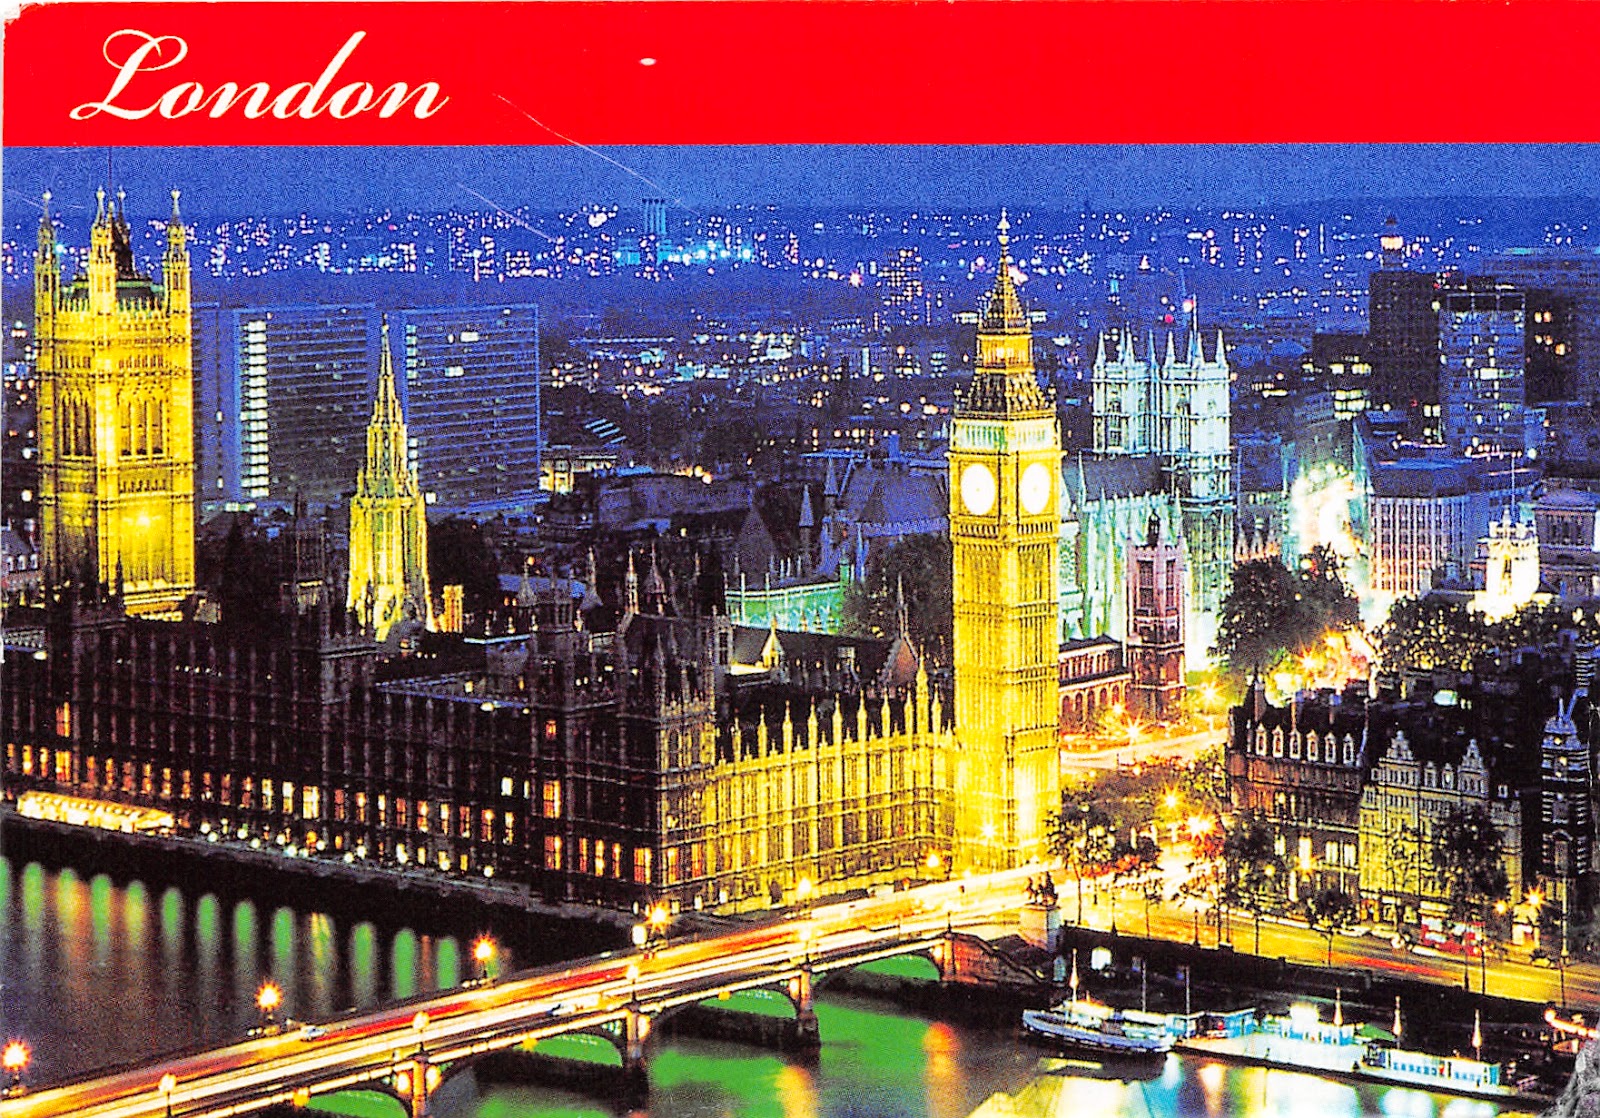 London столица. Лондон - столица Великобритании и один из крупнейших городов. London Capital на английском. London is the Capital of great Britain.